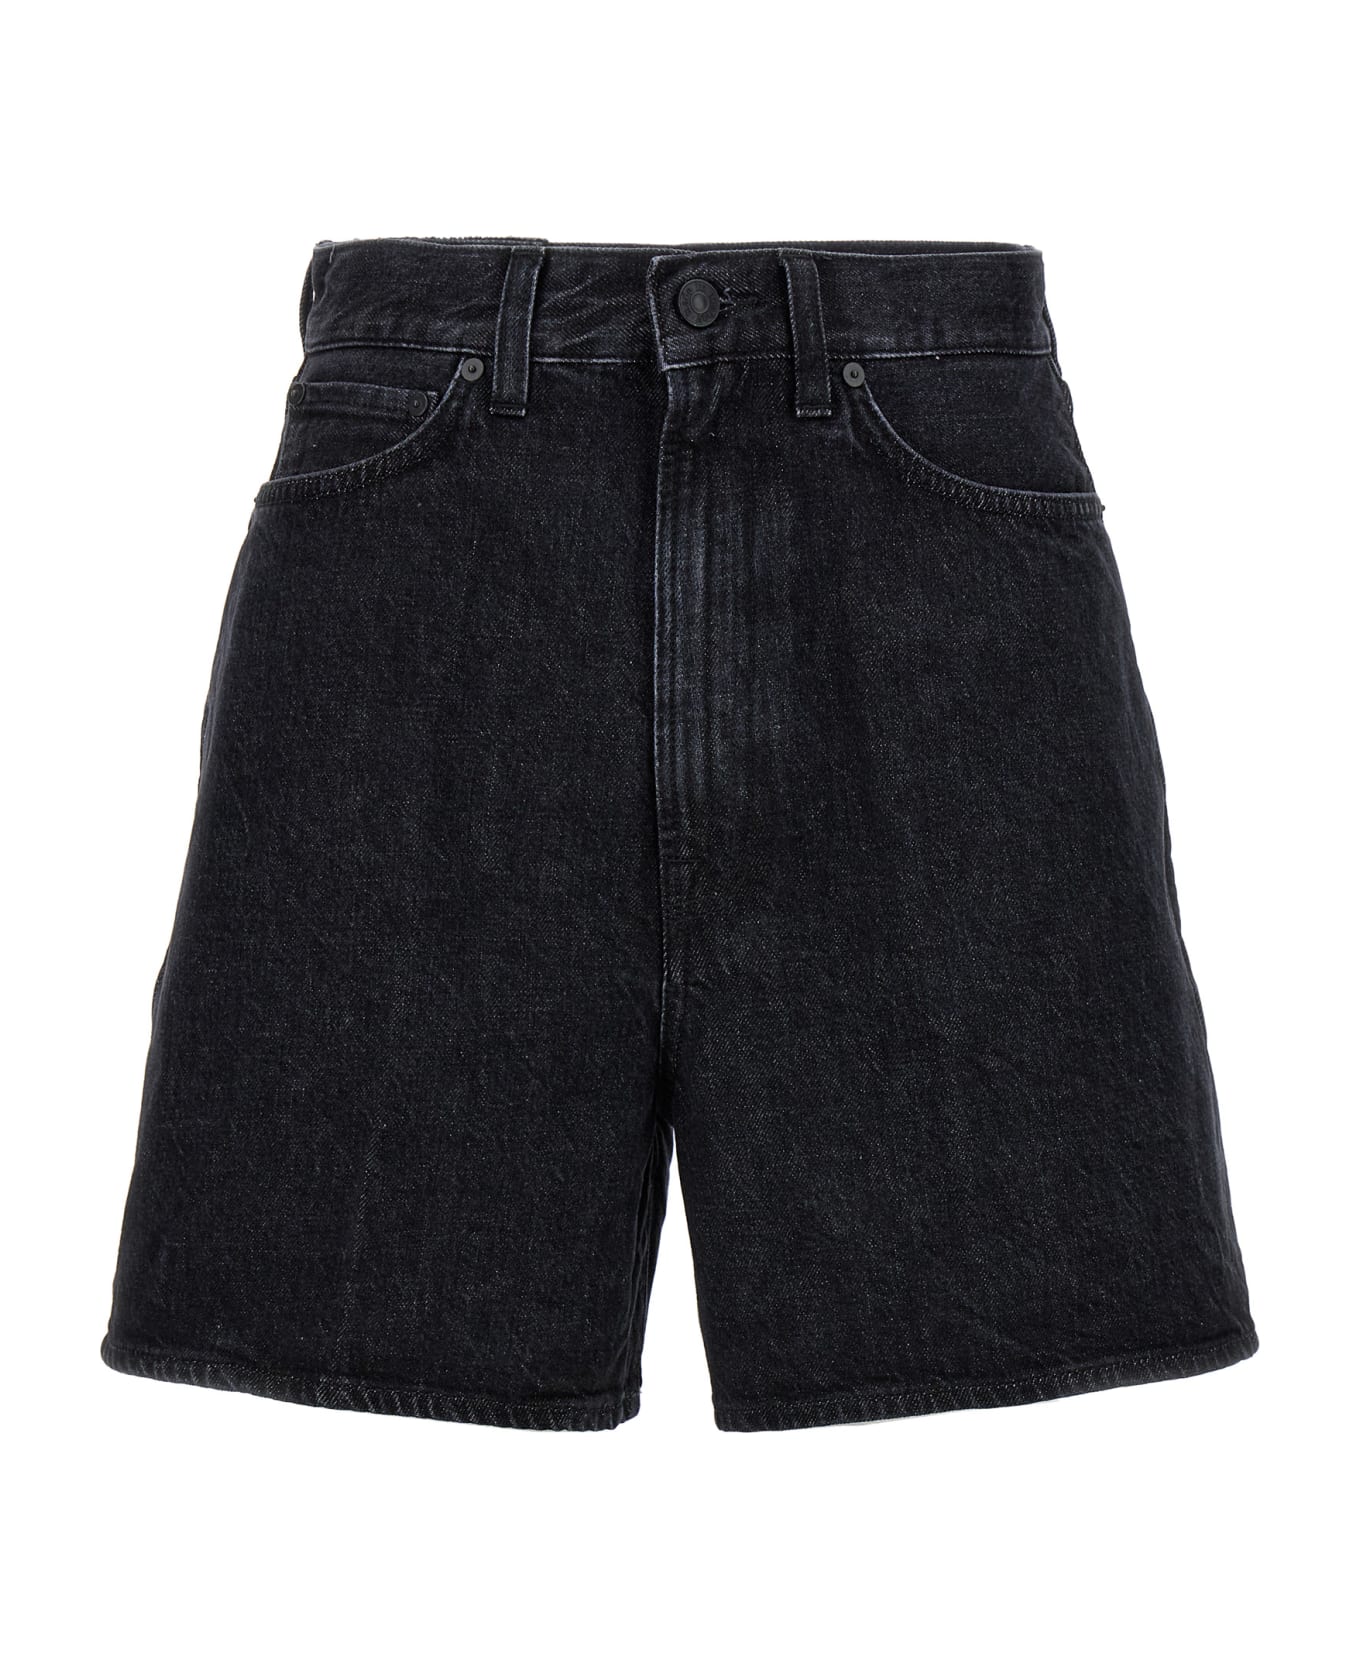 Made in Tomboy Denim Bermuda Shorts - Black   ショートパンツ